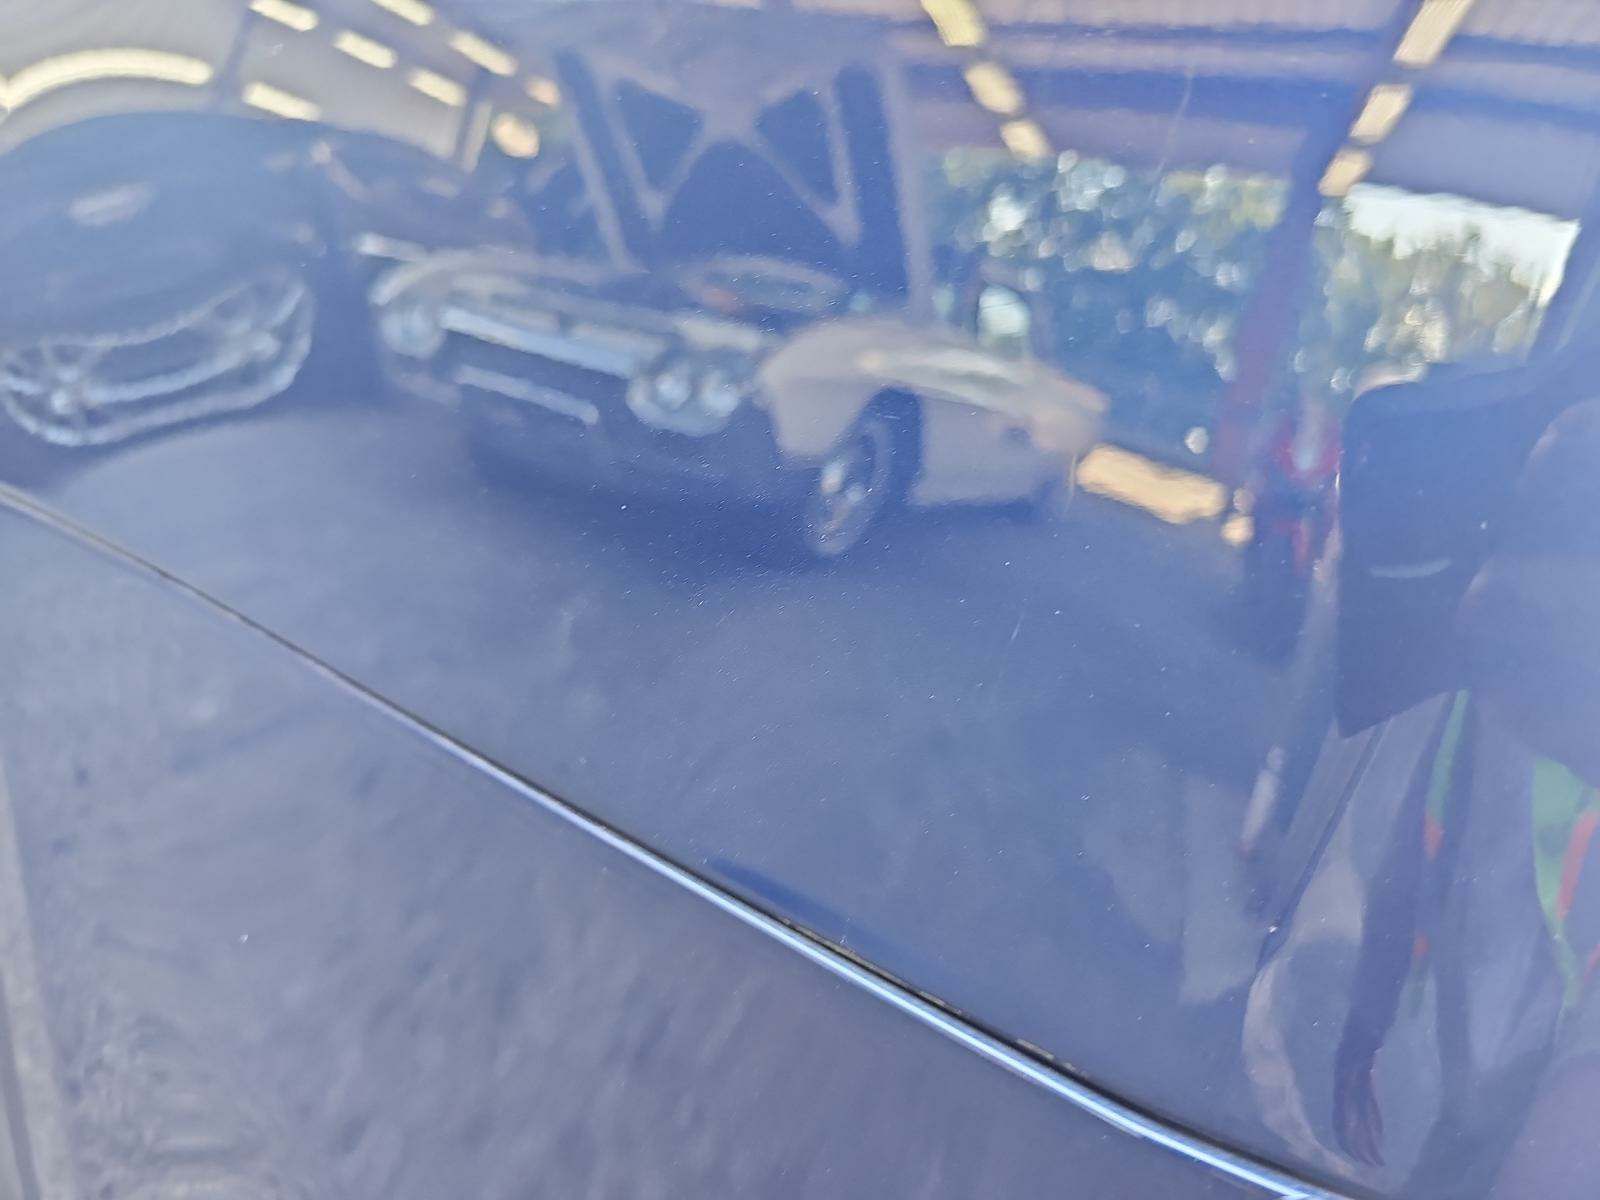 2016 Tesla Model X 75D AWD